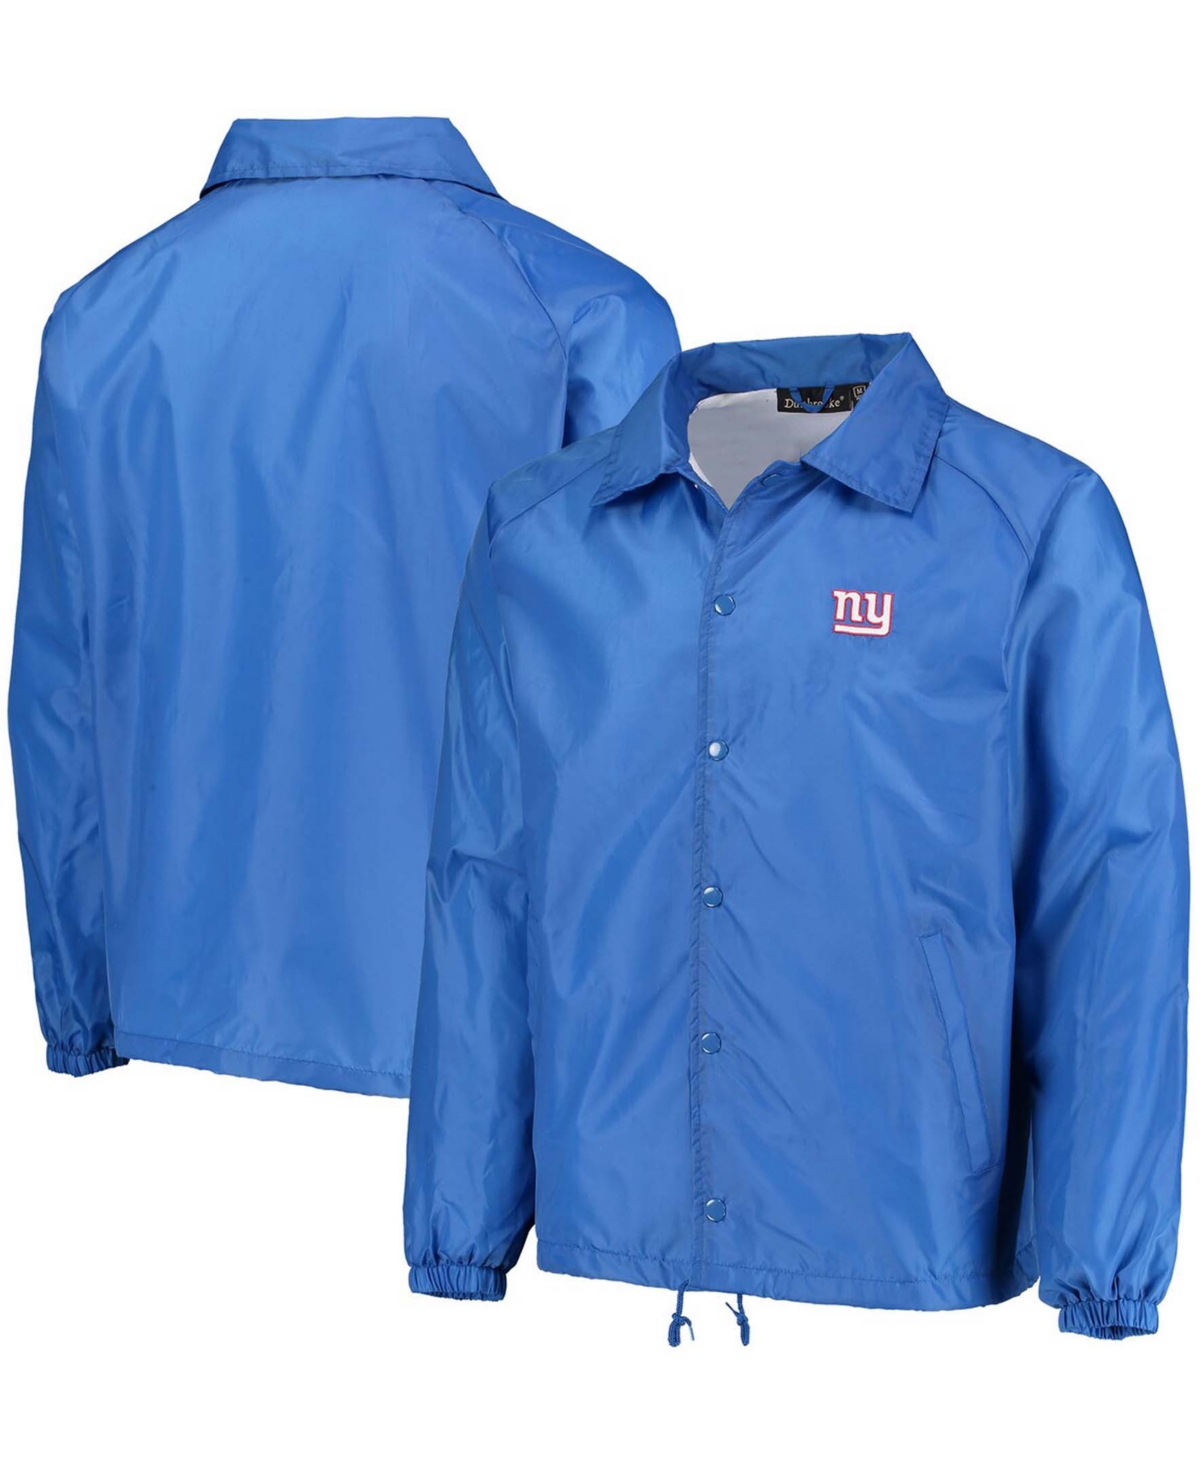 Men's Royal New York Giants Coaches Classic Raglan Full-Snap Windbreaker Jacket - Royal Blue